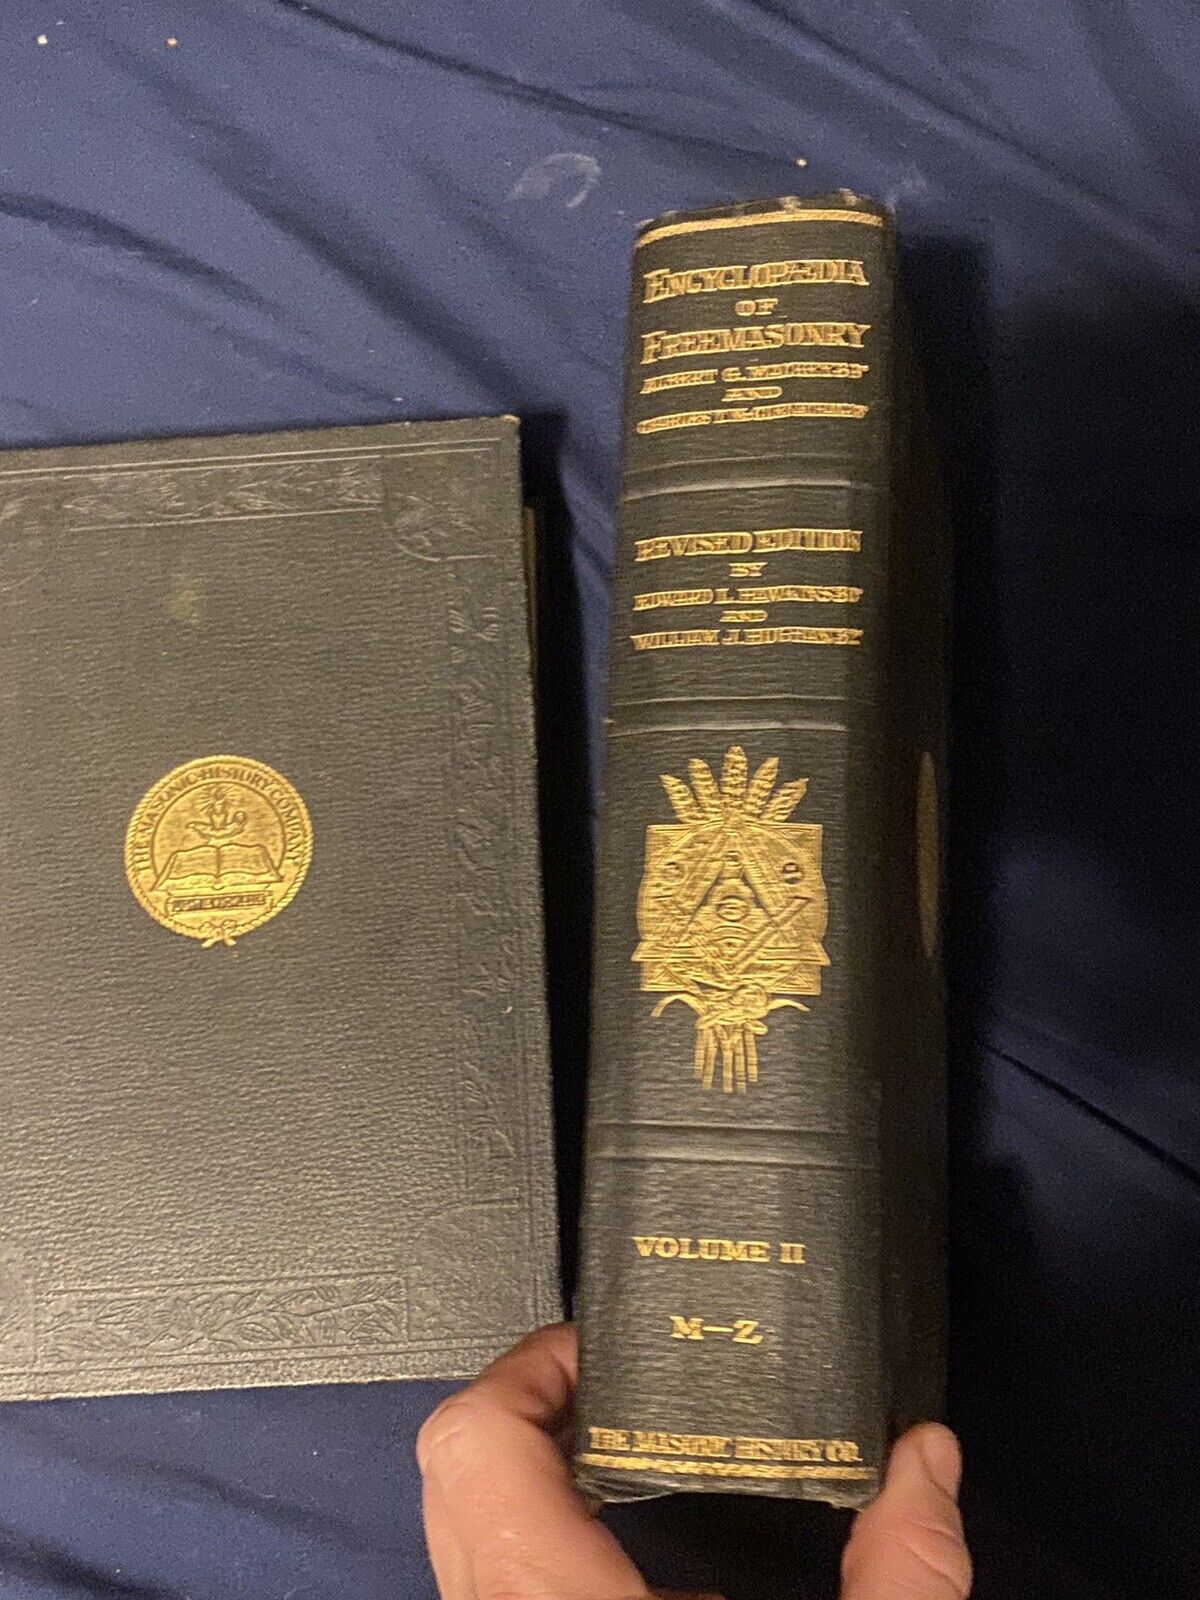 1919 Freemasonry Encyclopedia Volumes 1, 2. Signed     Get A Free Masonic Cap